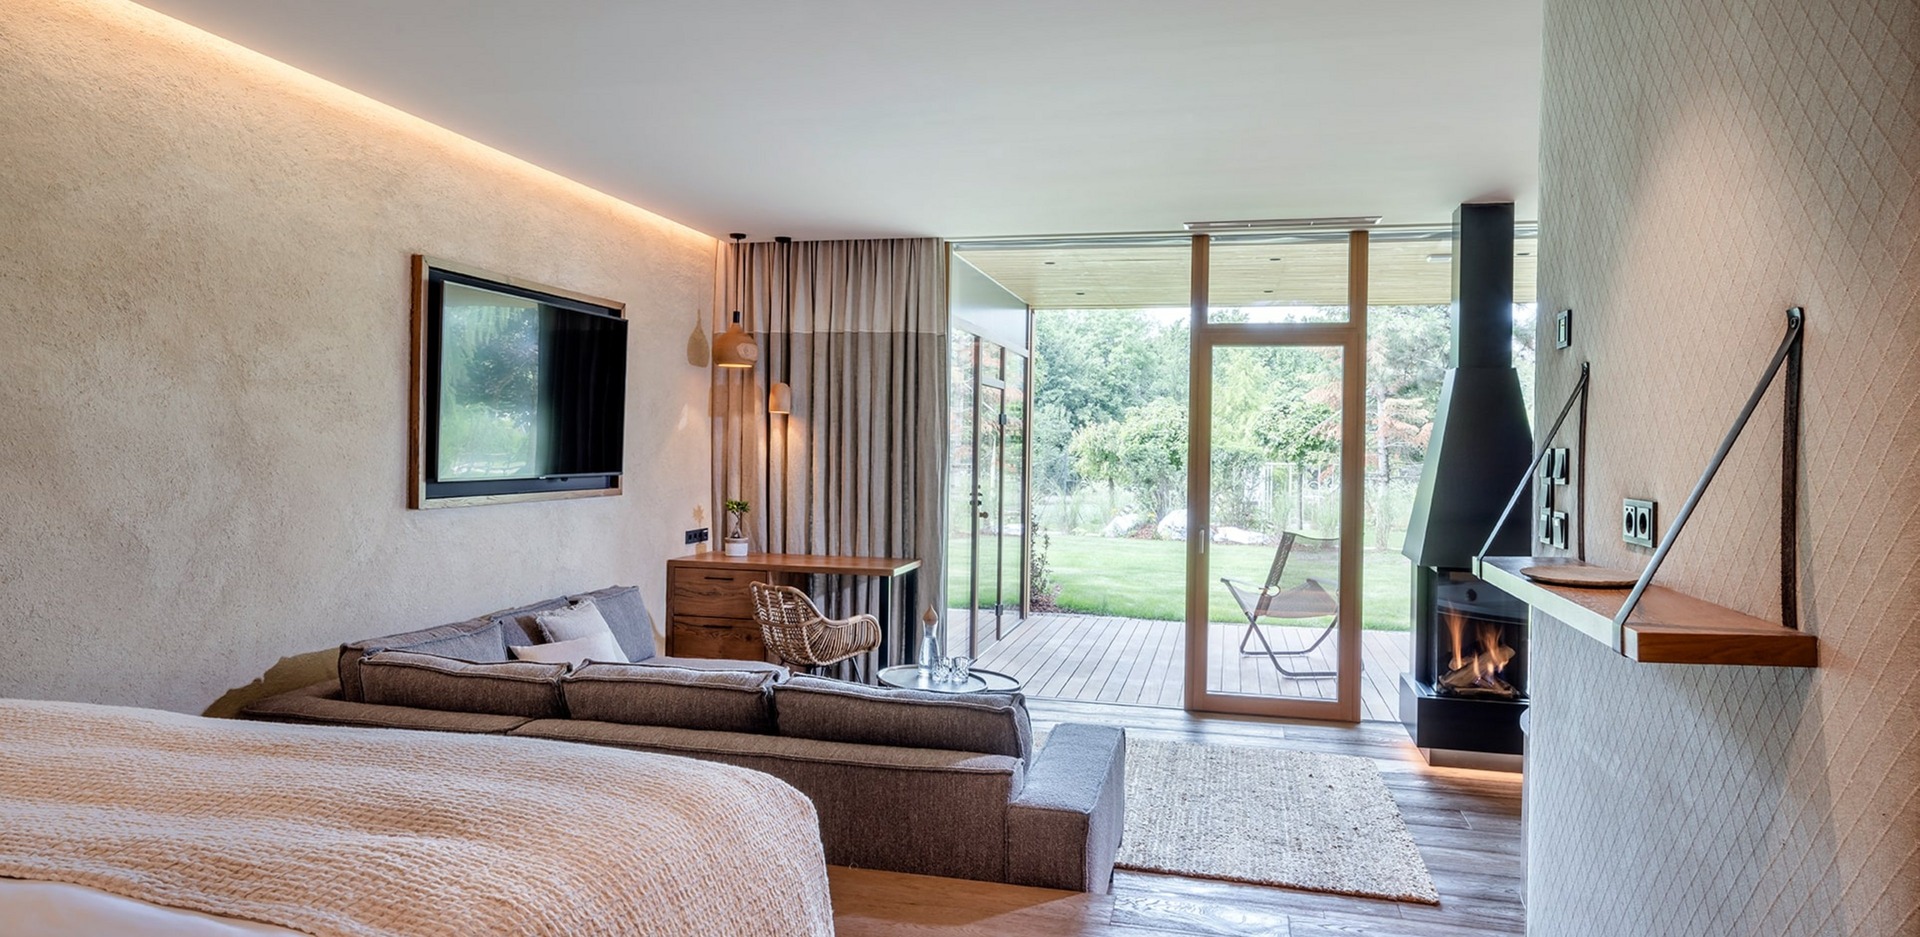 Hotel Gmachl/ village suites with garden view. Terrace, air conditioning, wooden floor, whirlpool, sauna, infrared.